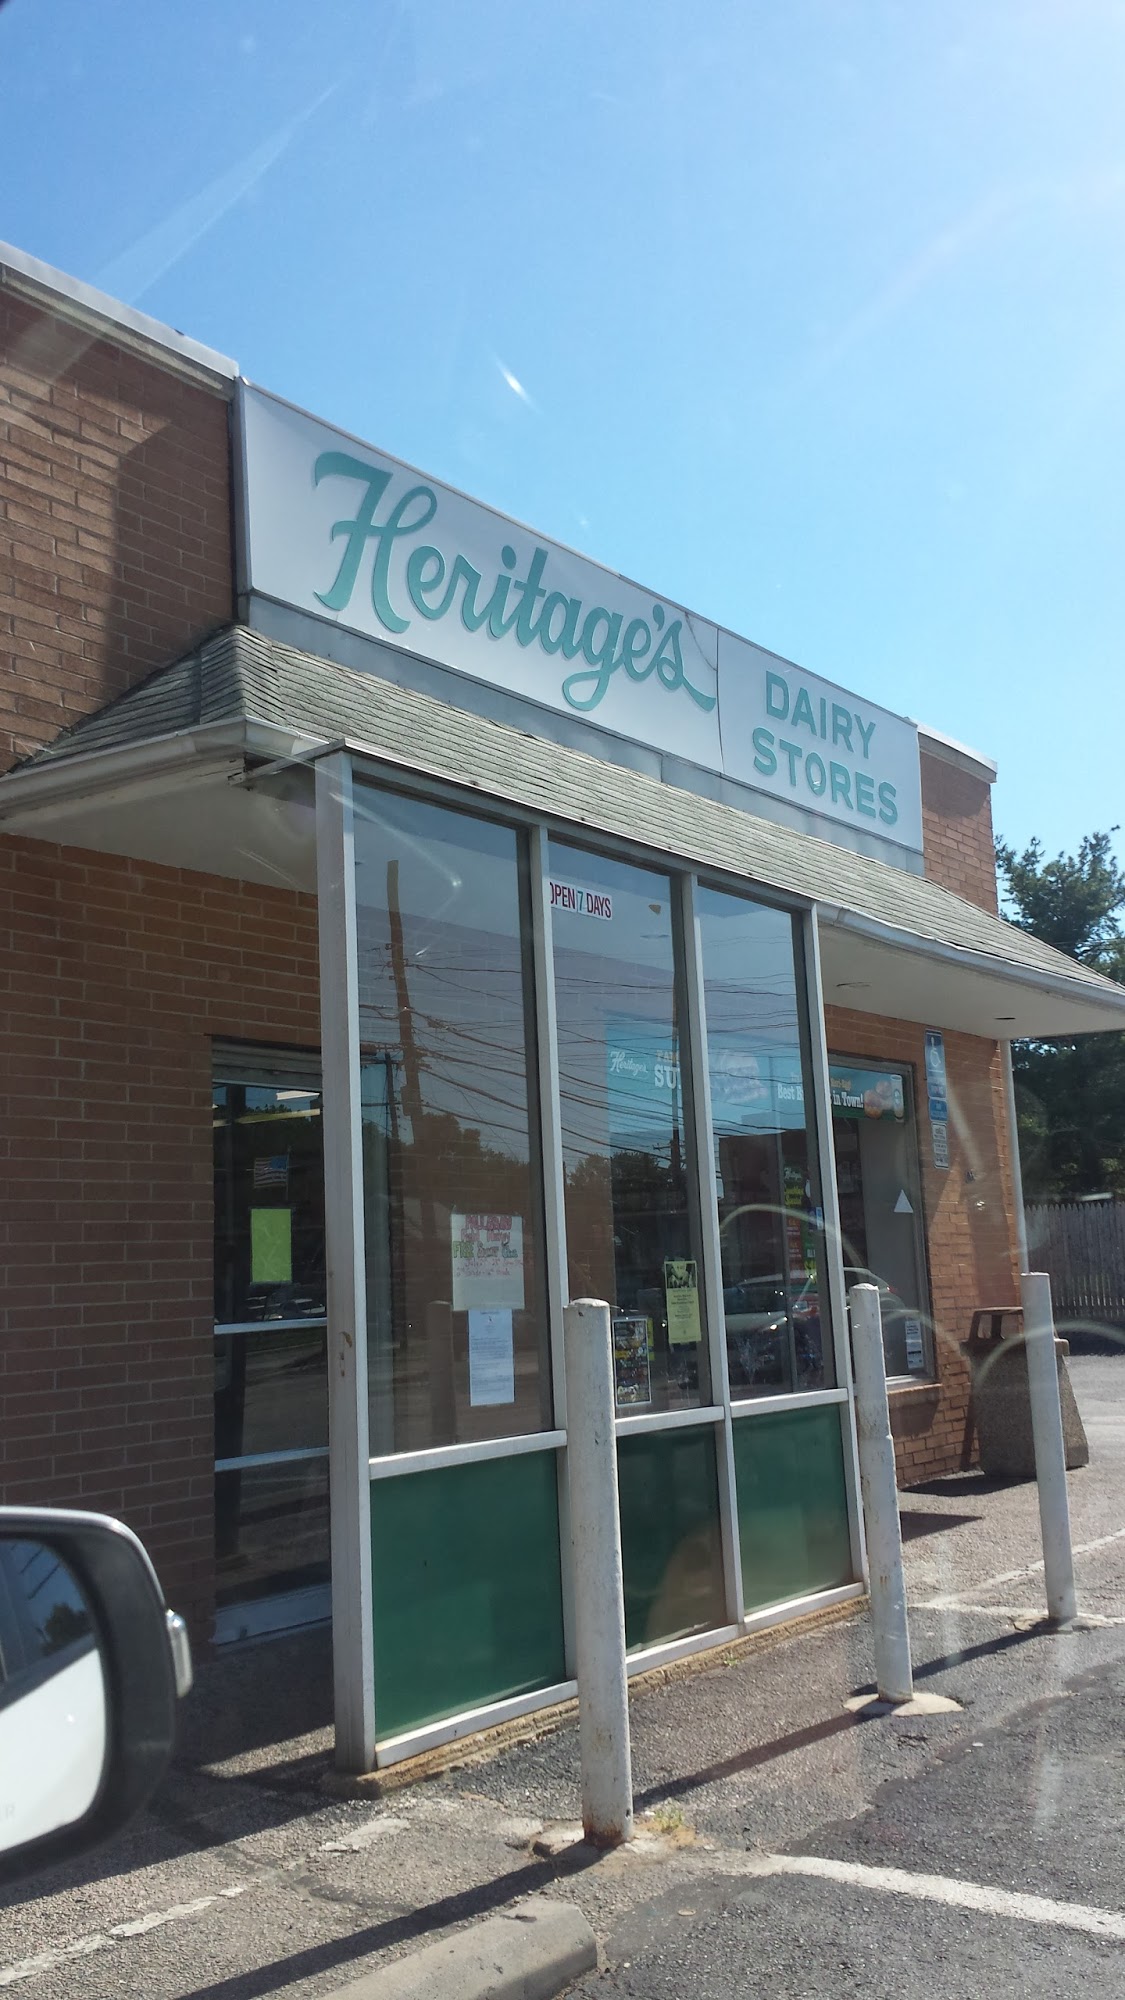 Heritage's Dairy Stores